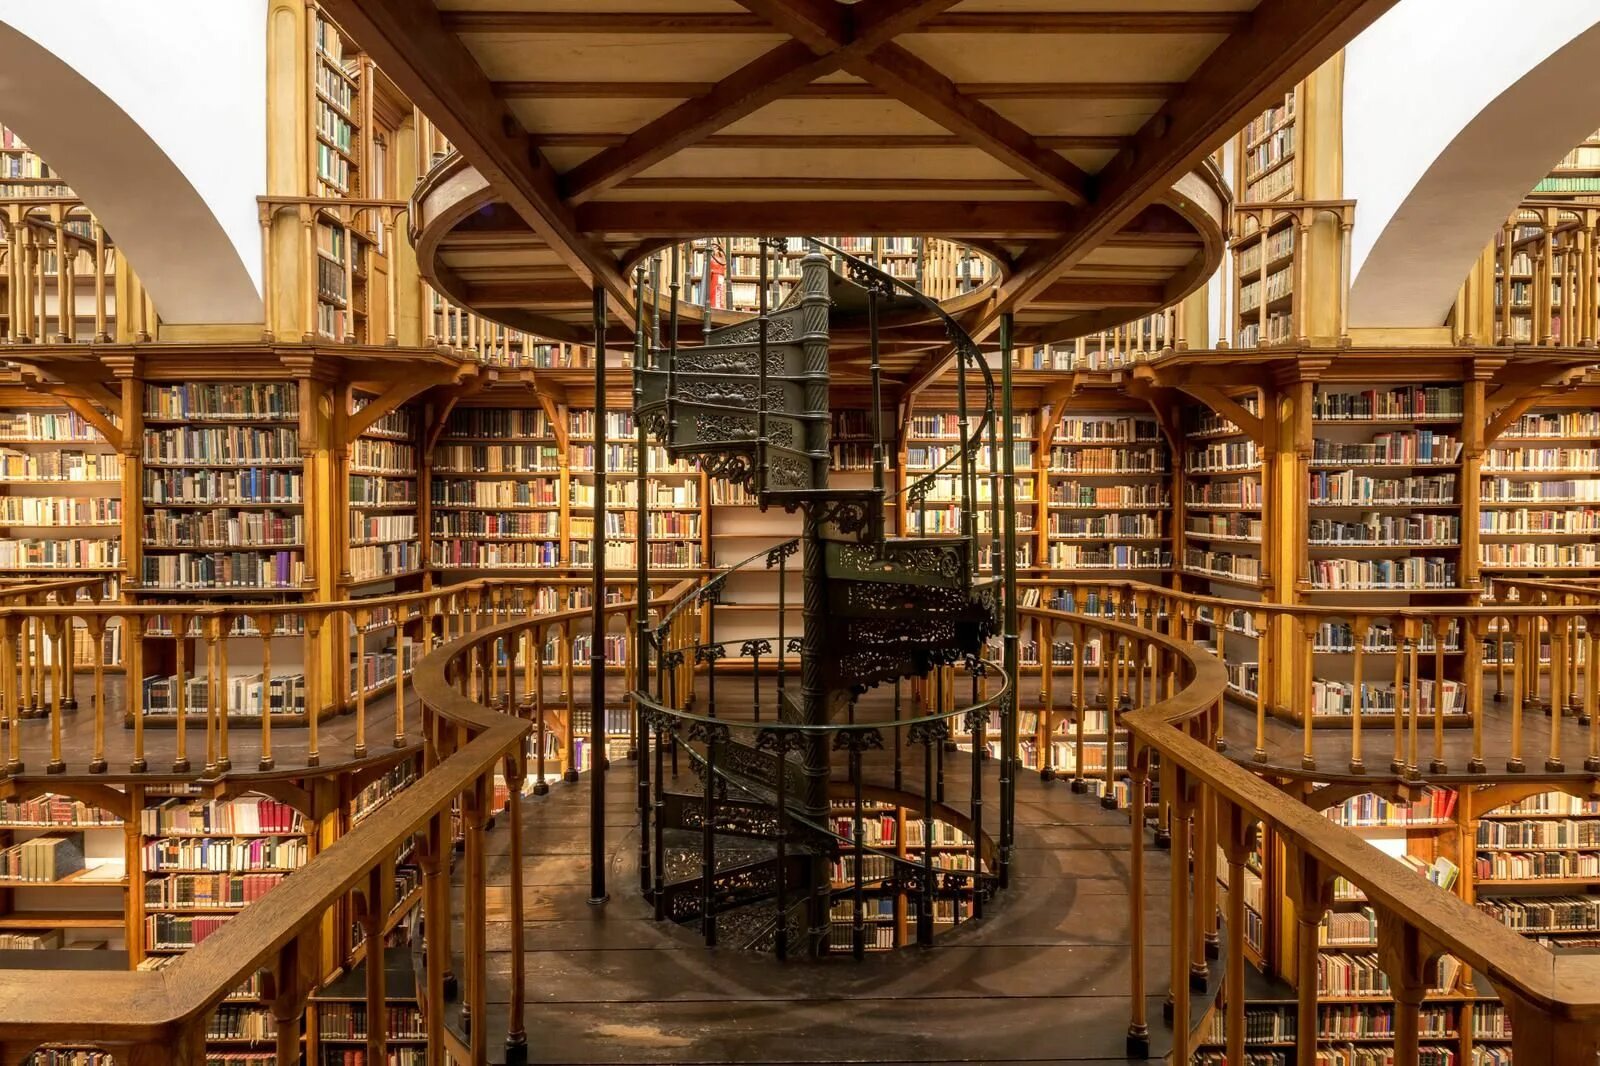 G library. Библиотека науки, Герлиц, Германия. Maria Laach Abbey Library. Библиотека Джироламини Италия.